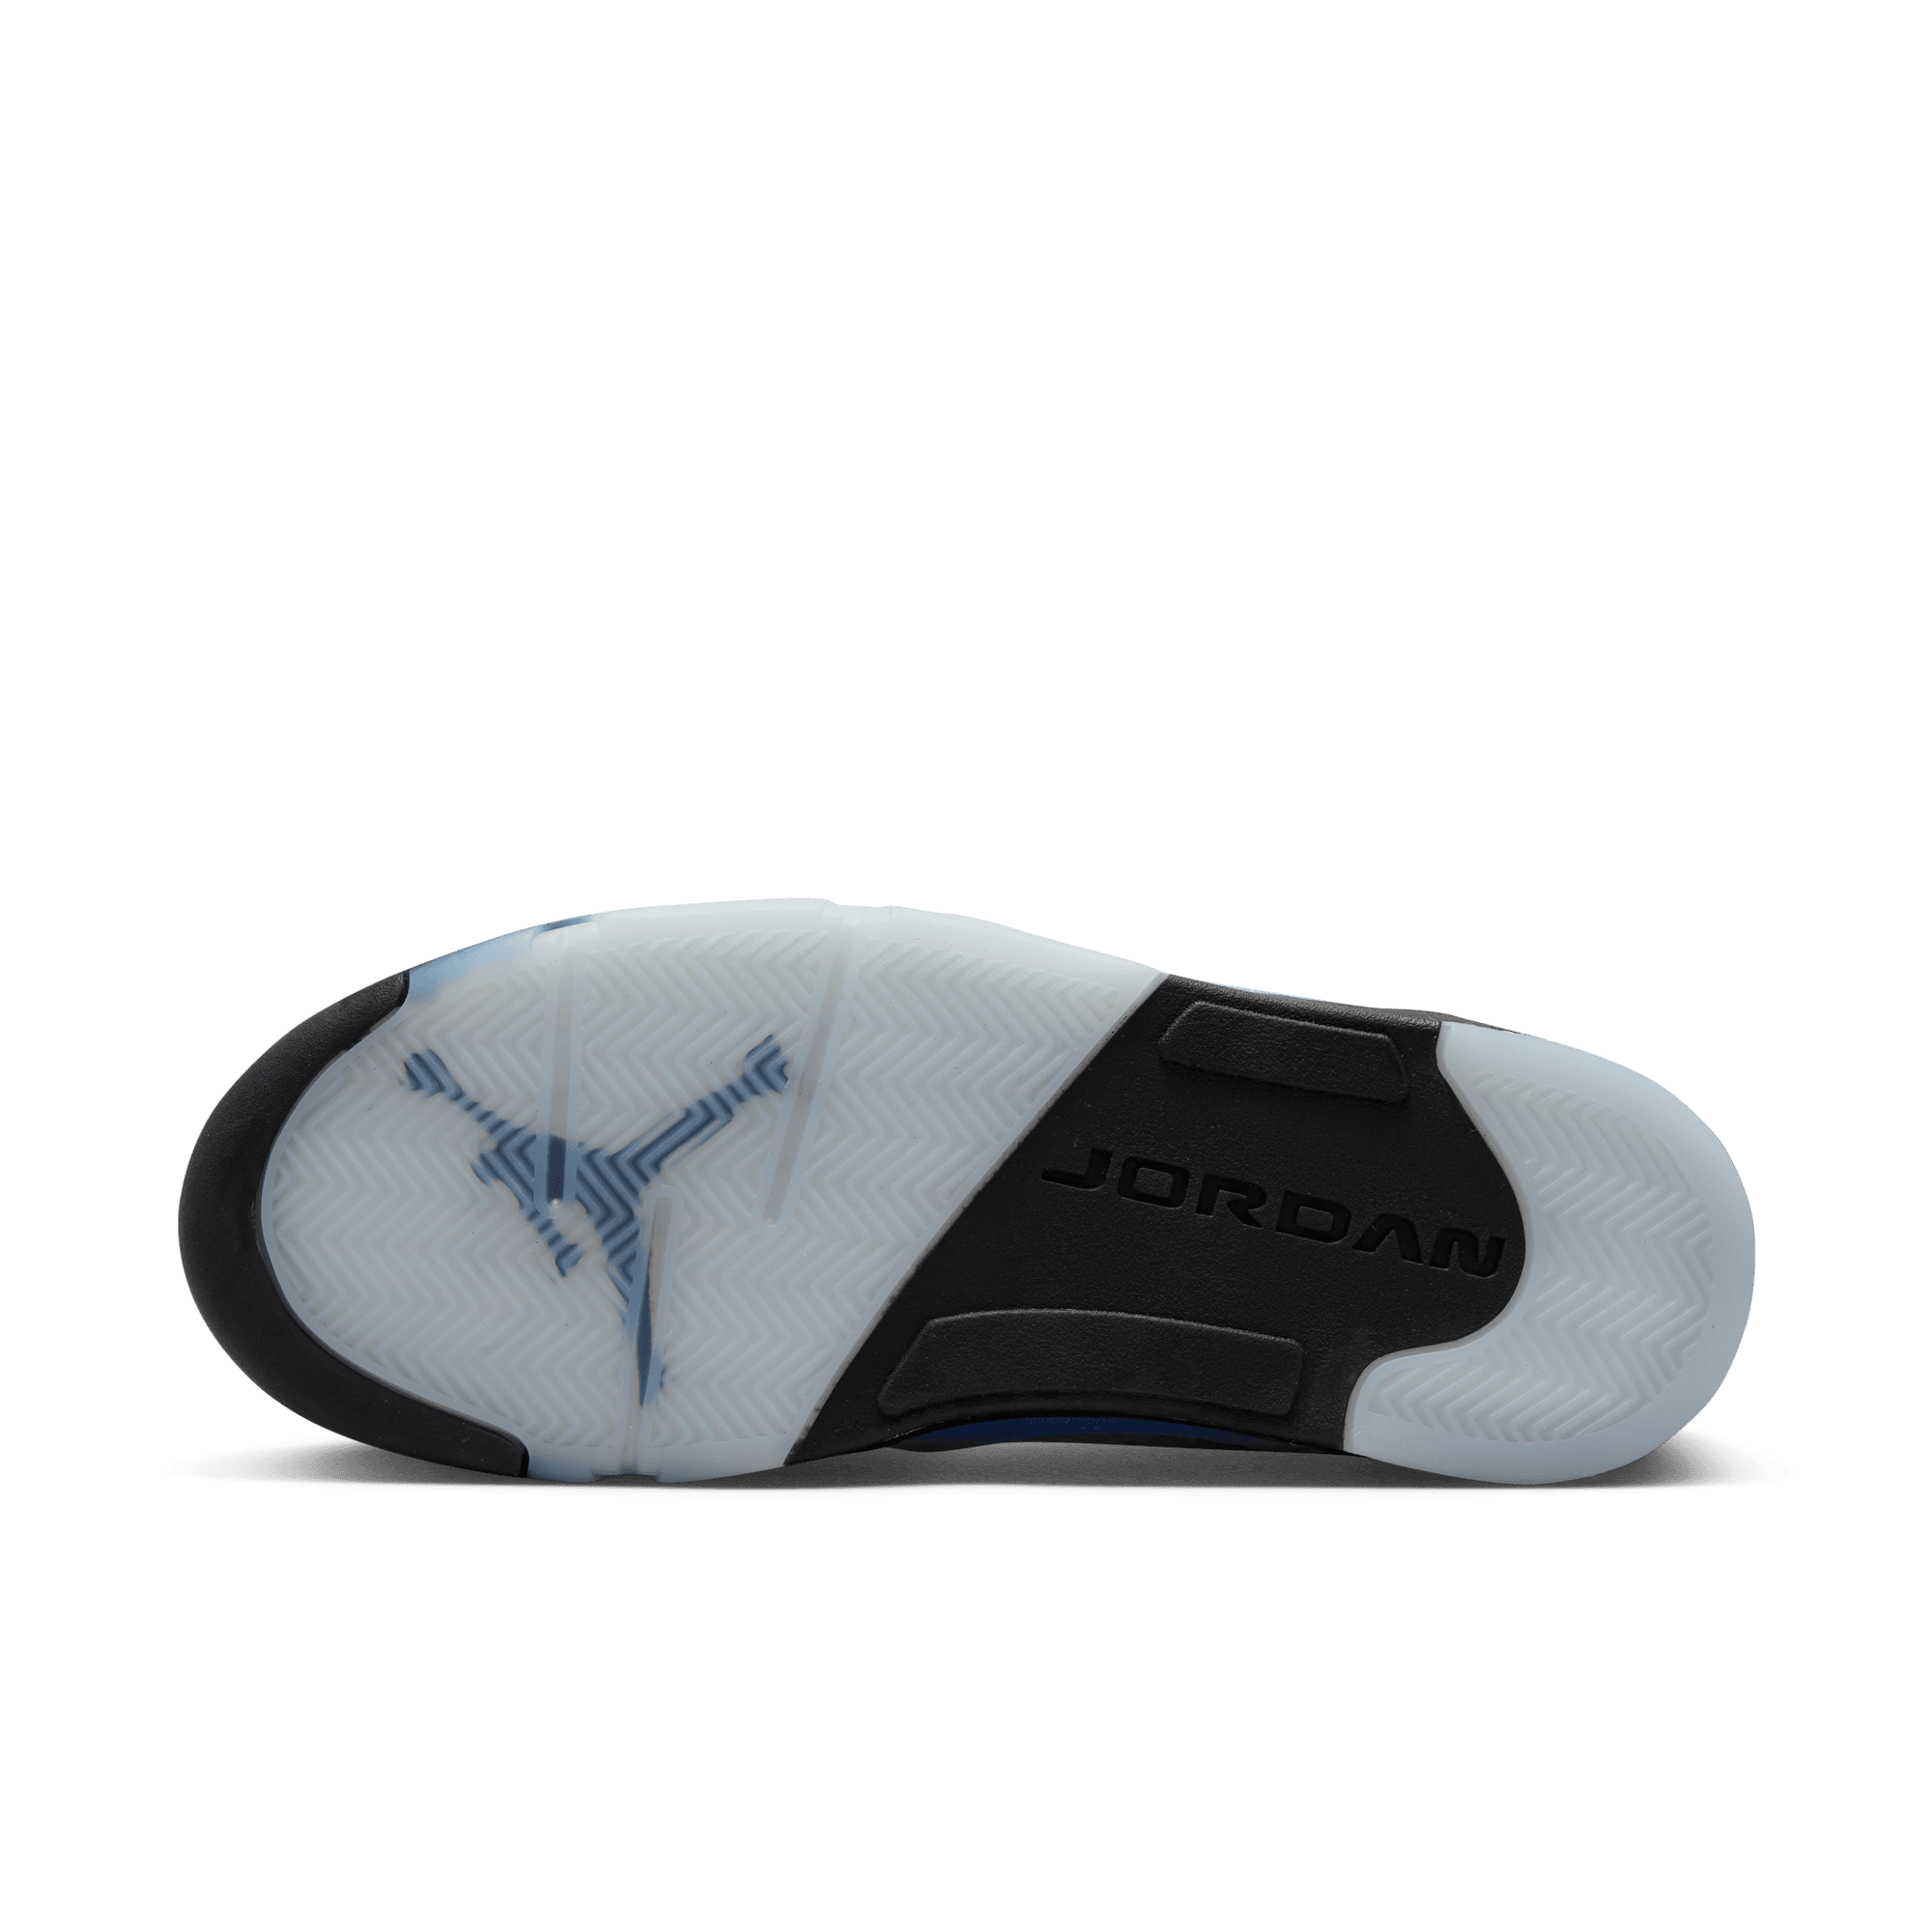 Air Jordan 5 Black Grape  Kicks shoes, Jordans outfit for men, Air jordans  retro